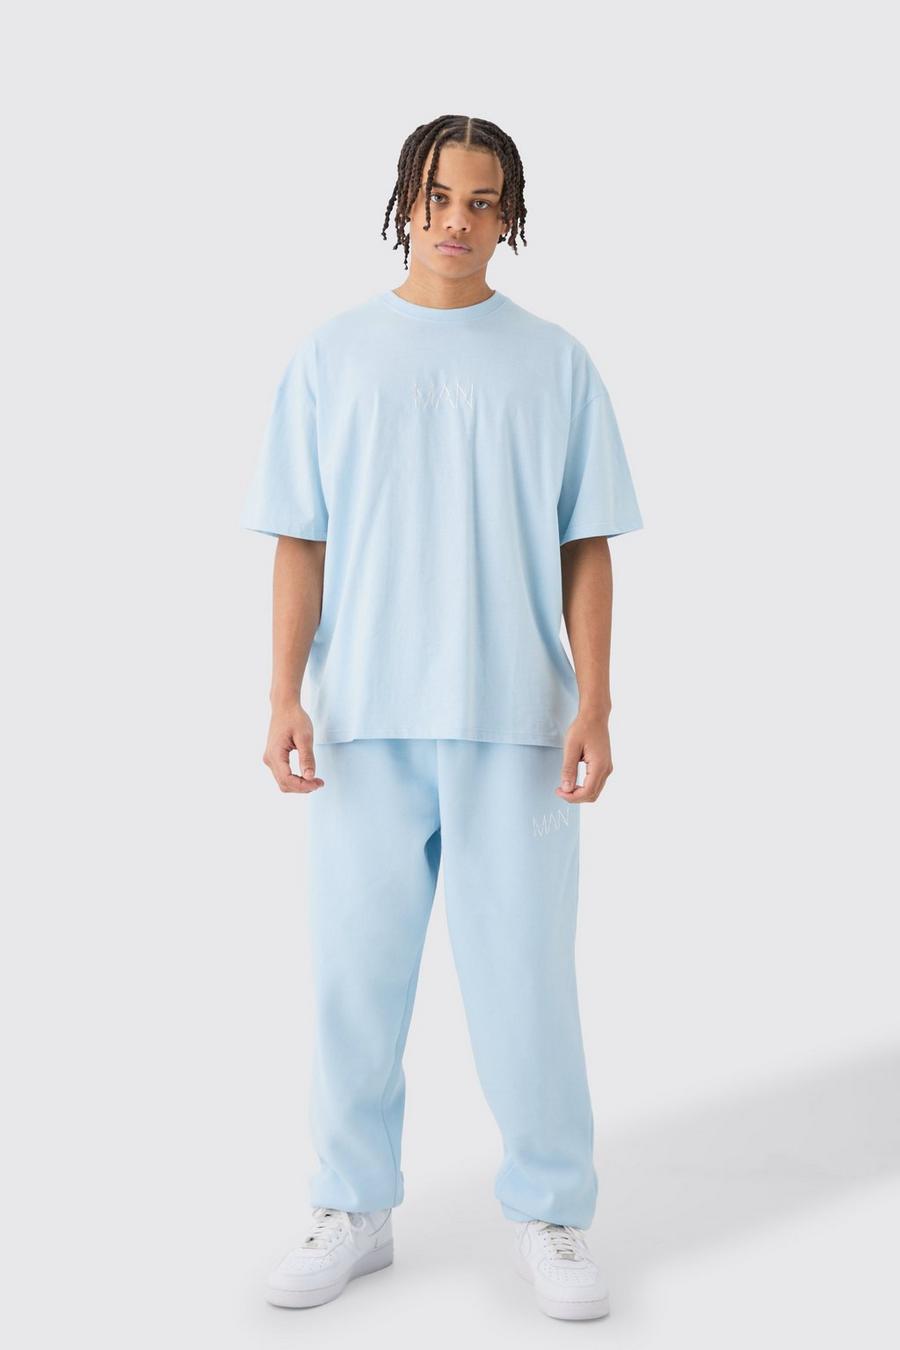 Ensemble oversize avec t-shirt et jogging - MAN, Light blue image number 1